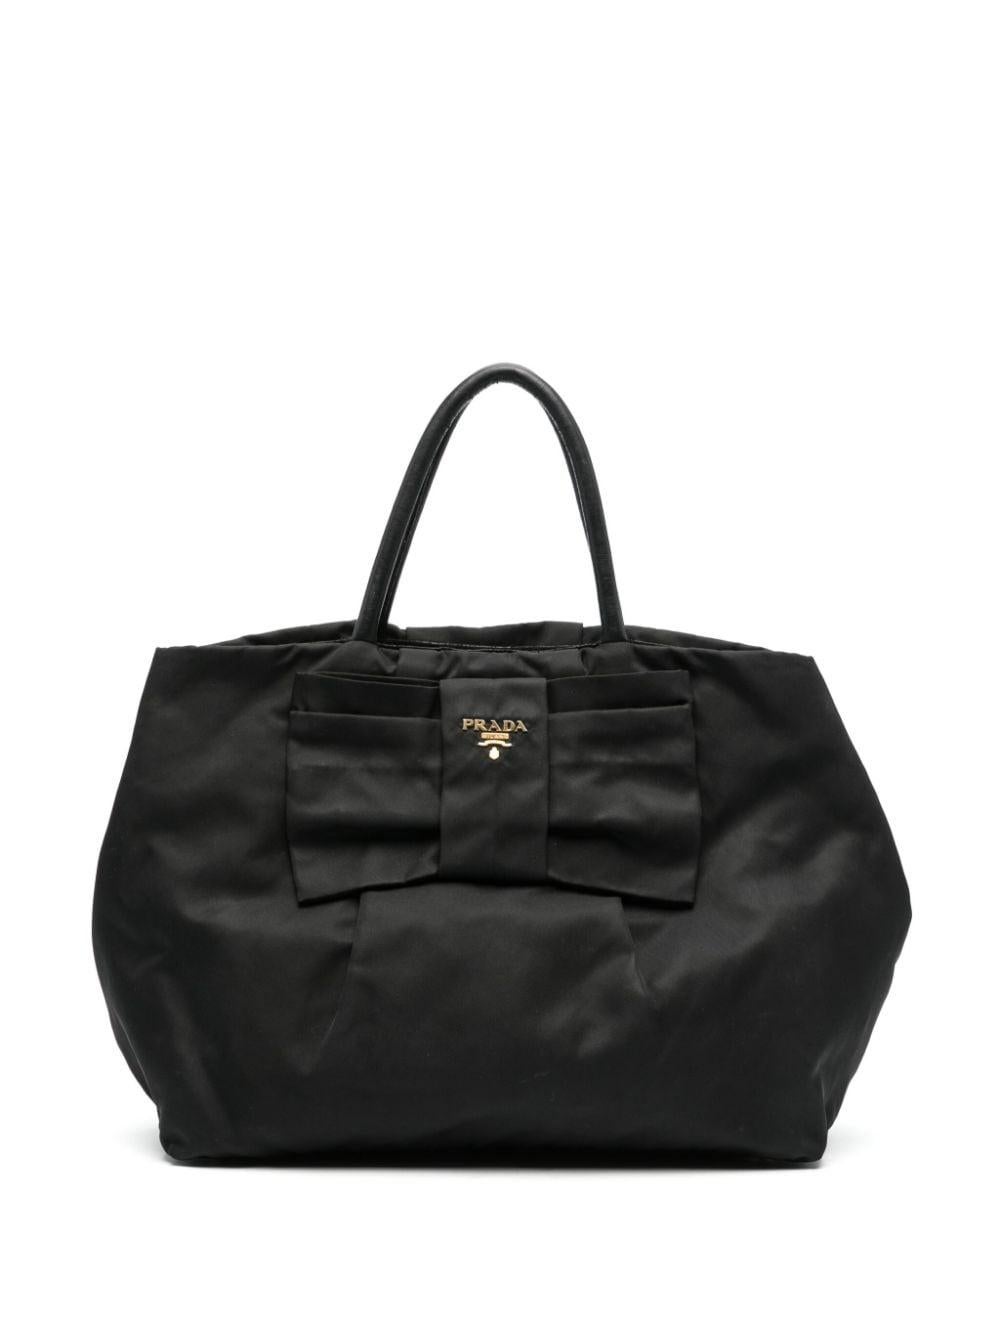 Prada Black Nylon Bow-Detail Handbag For Sale 2